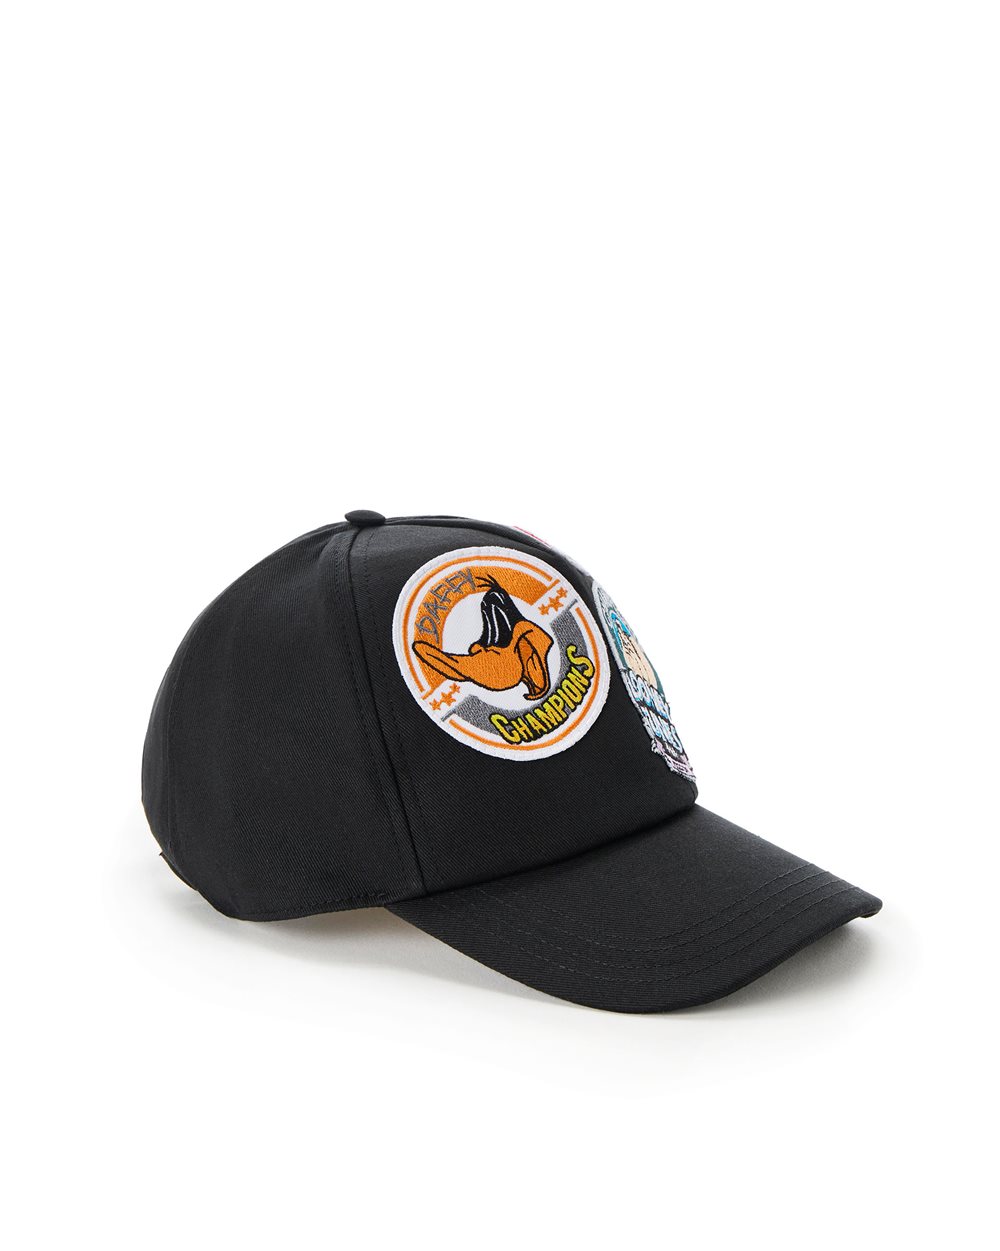 Baseball cap with cartoon patches and logo -  ( SECONDO STEP DE ) PROMO SALDI UP TO 50% | Iceberg - Official Website